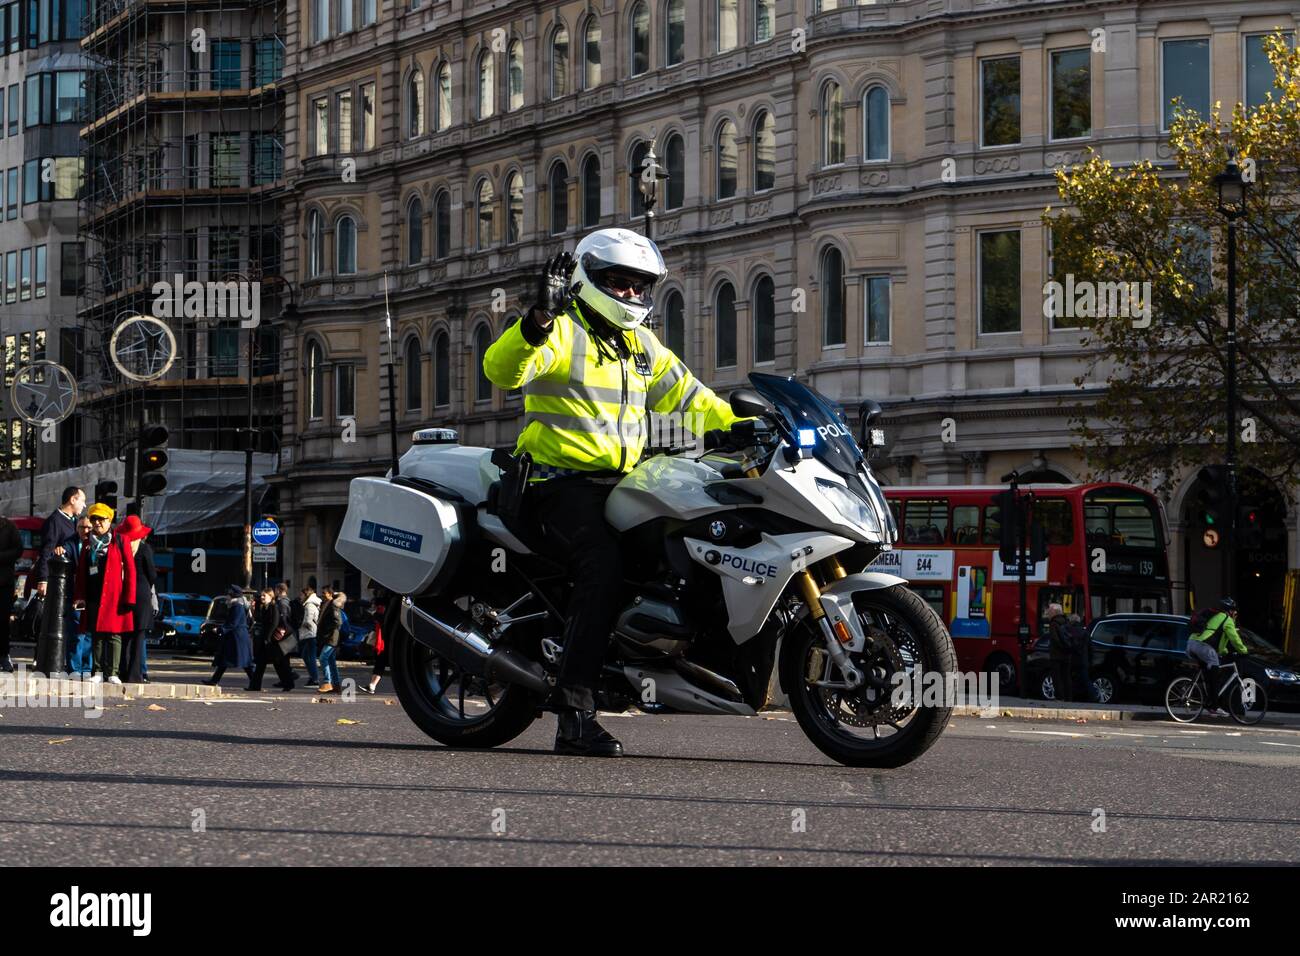 LONDON, UNITED KINGDOM - Nov 11, 2019: British police officer on motor bike stops car traffic at busy trafalgar square intersection for government esc Stock Photo